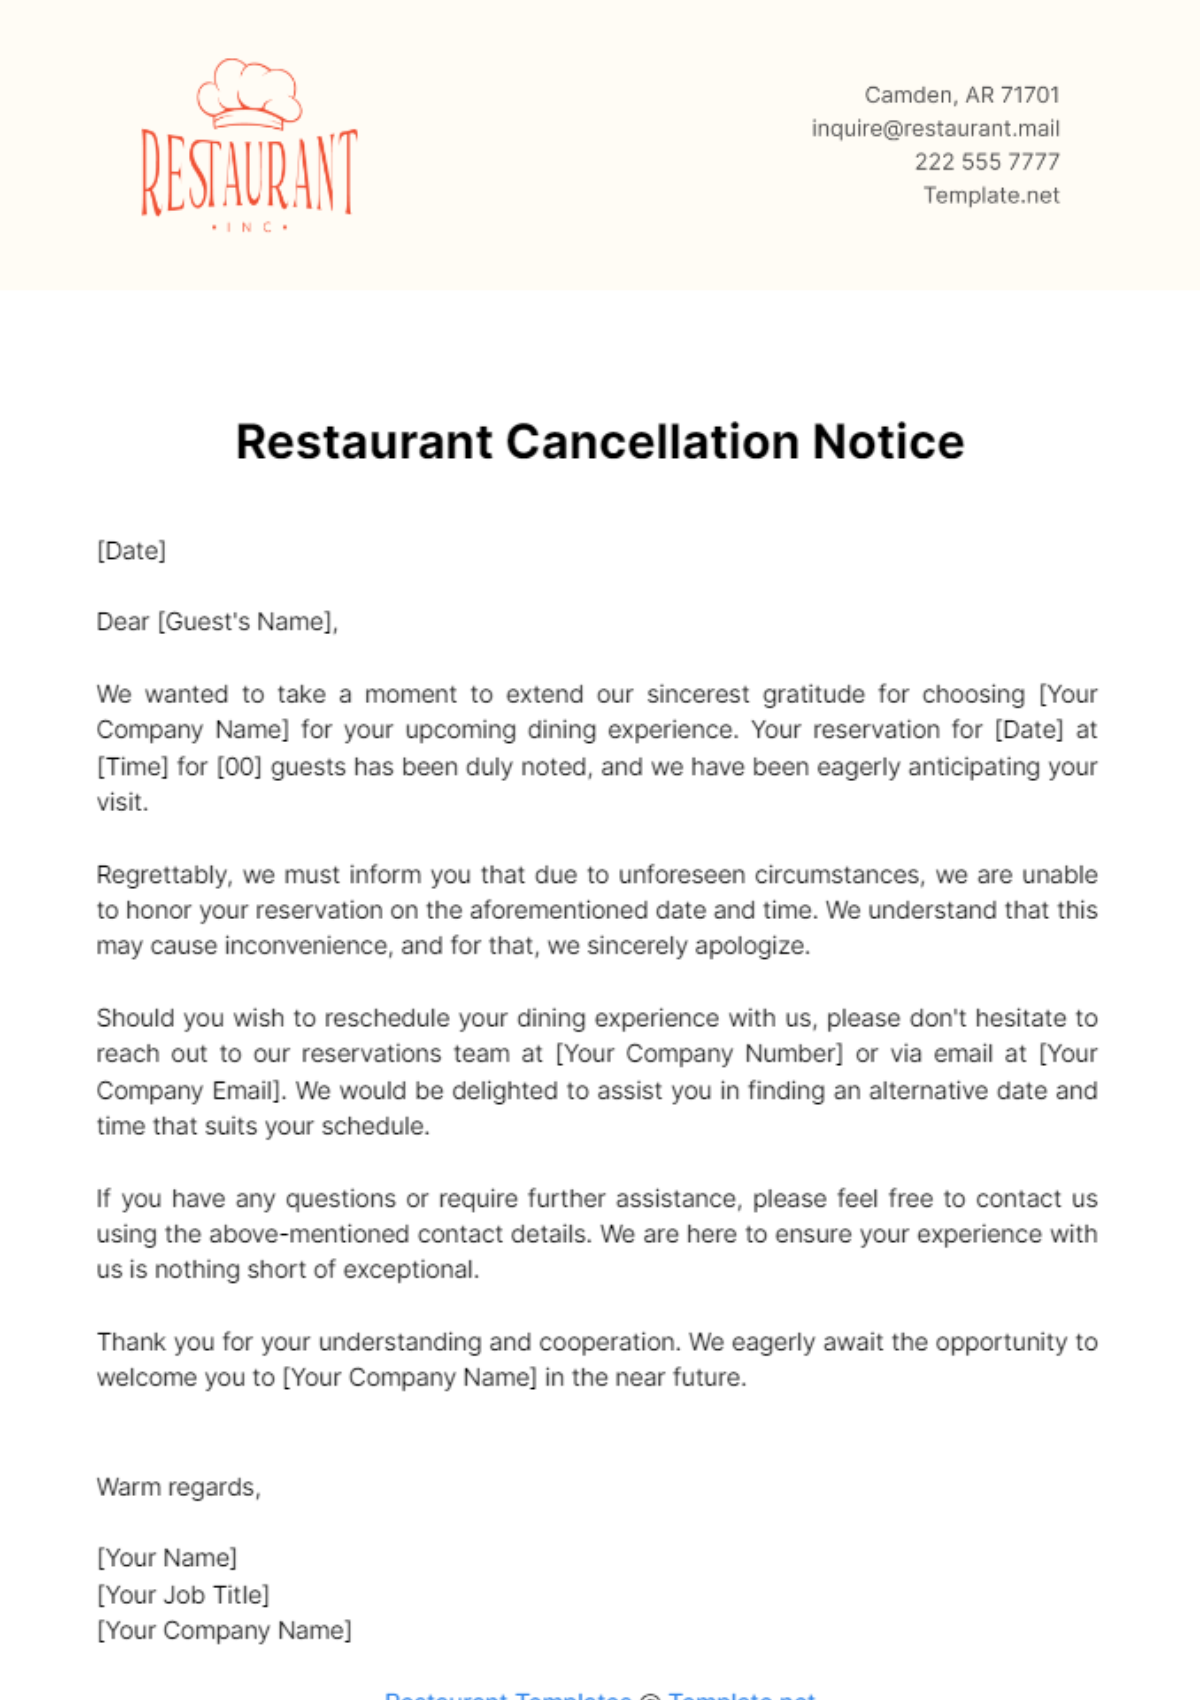 Free Restaurant Cancellation Notice Template